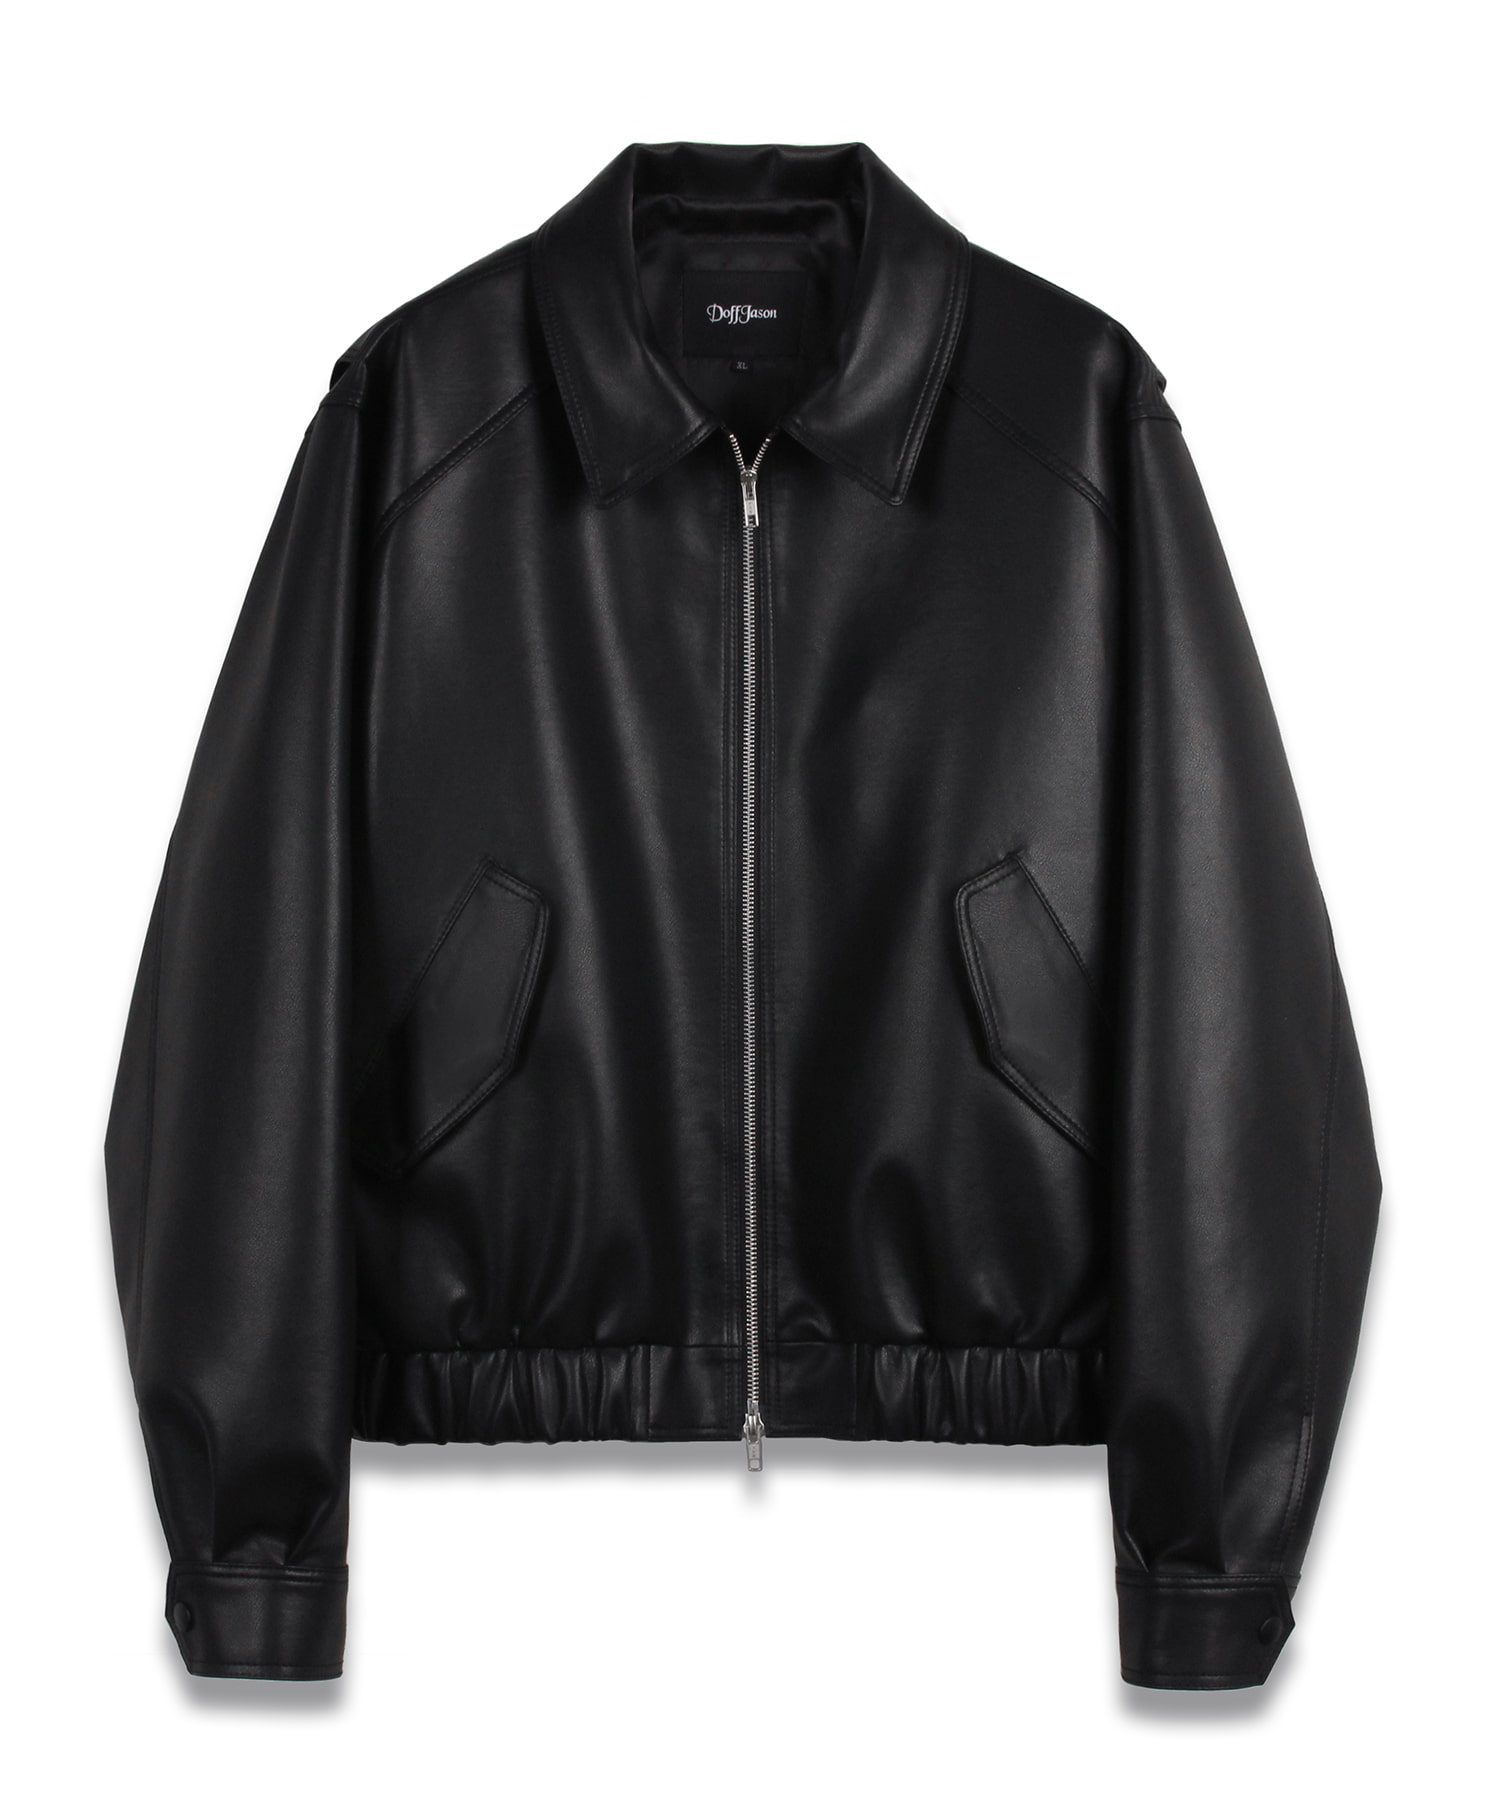 Overfit vegan leather bomber jacket